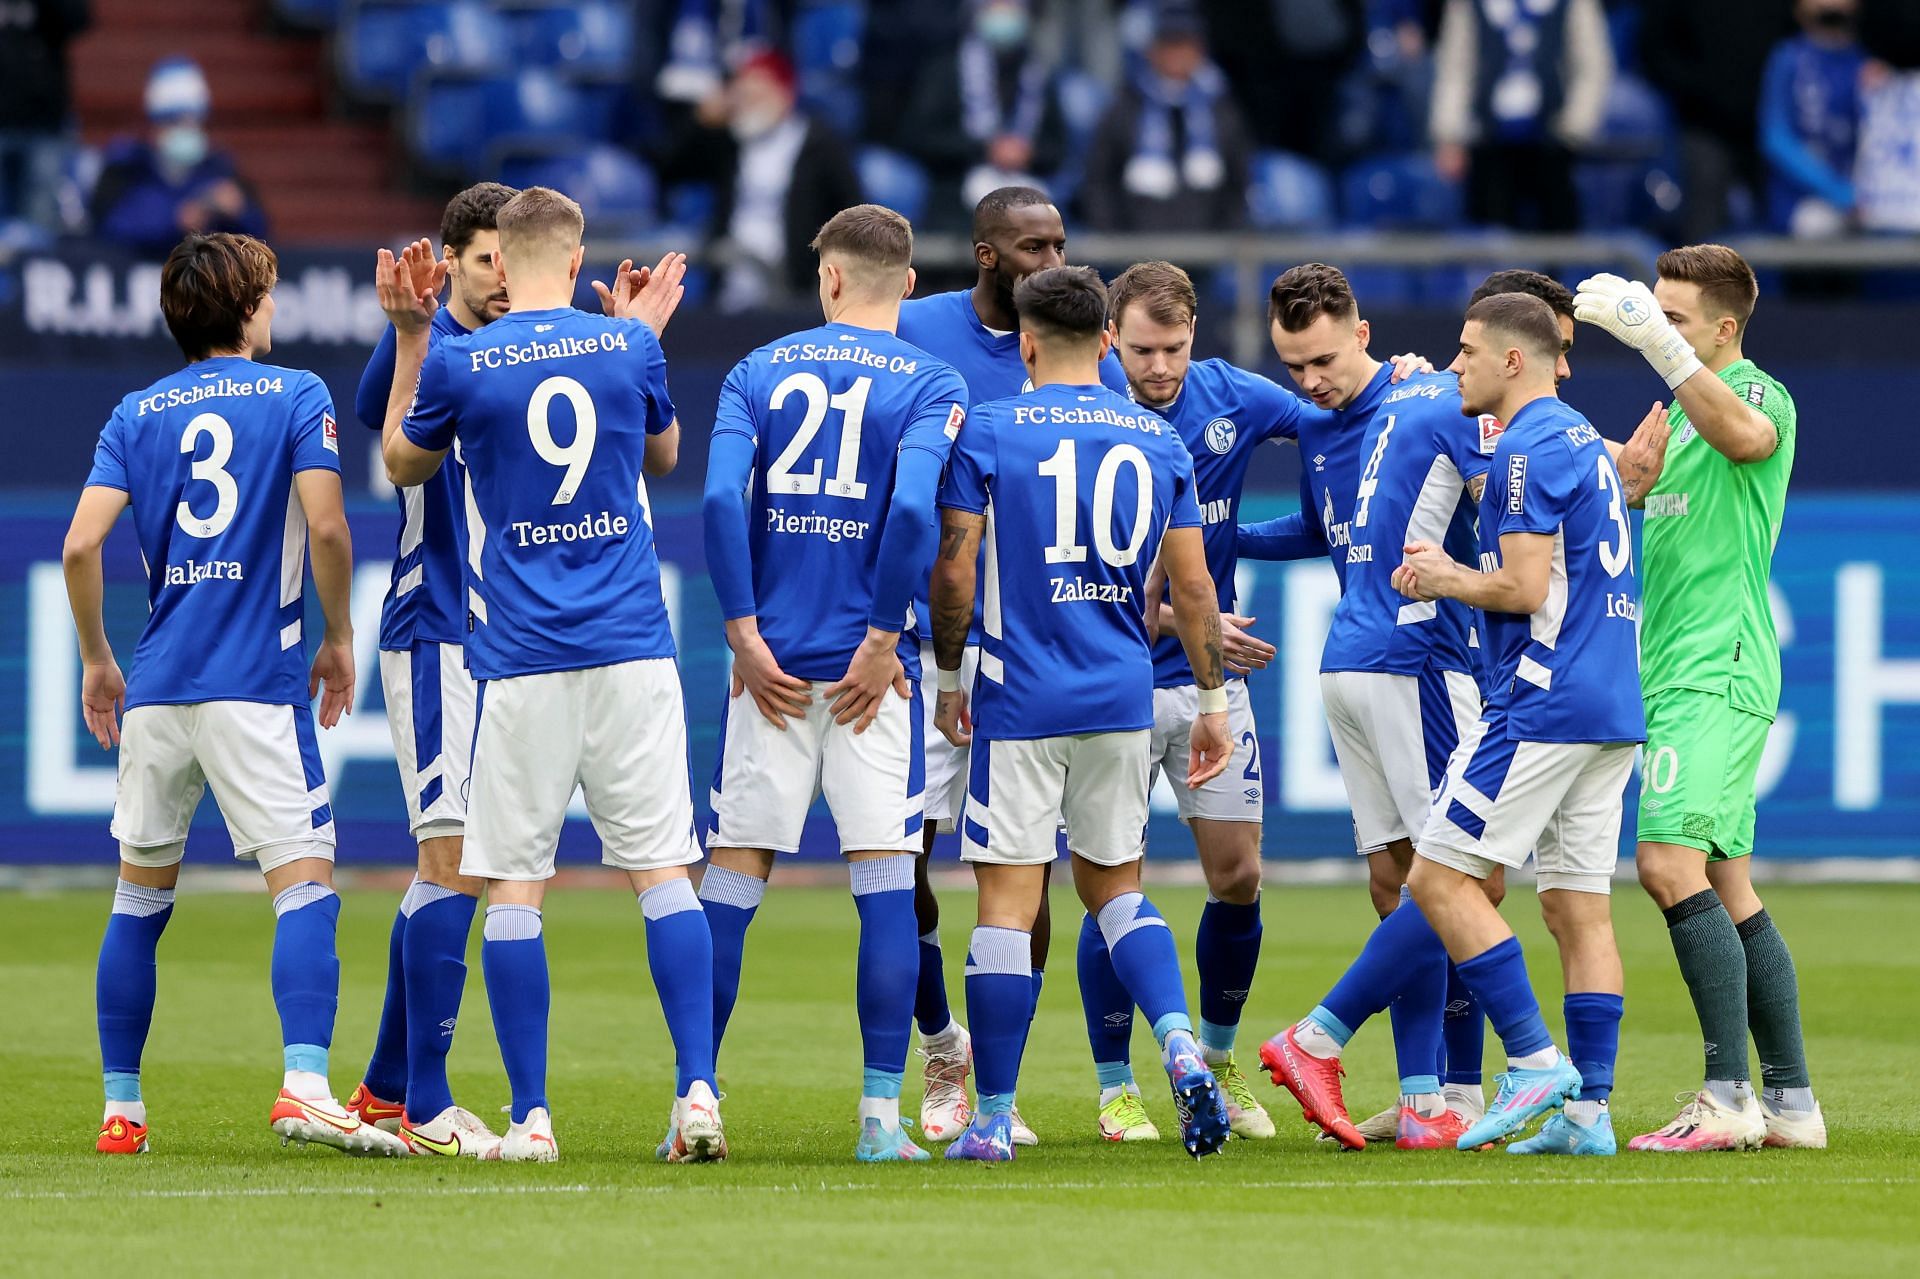 Fortuna Dusseldorf and Schalke square off in a 2.Bundesliga fixture on Sunday